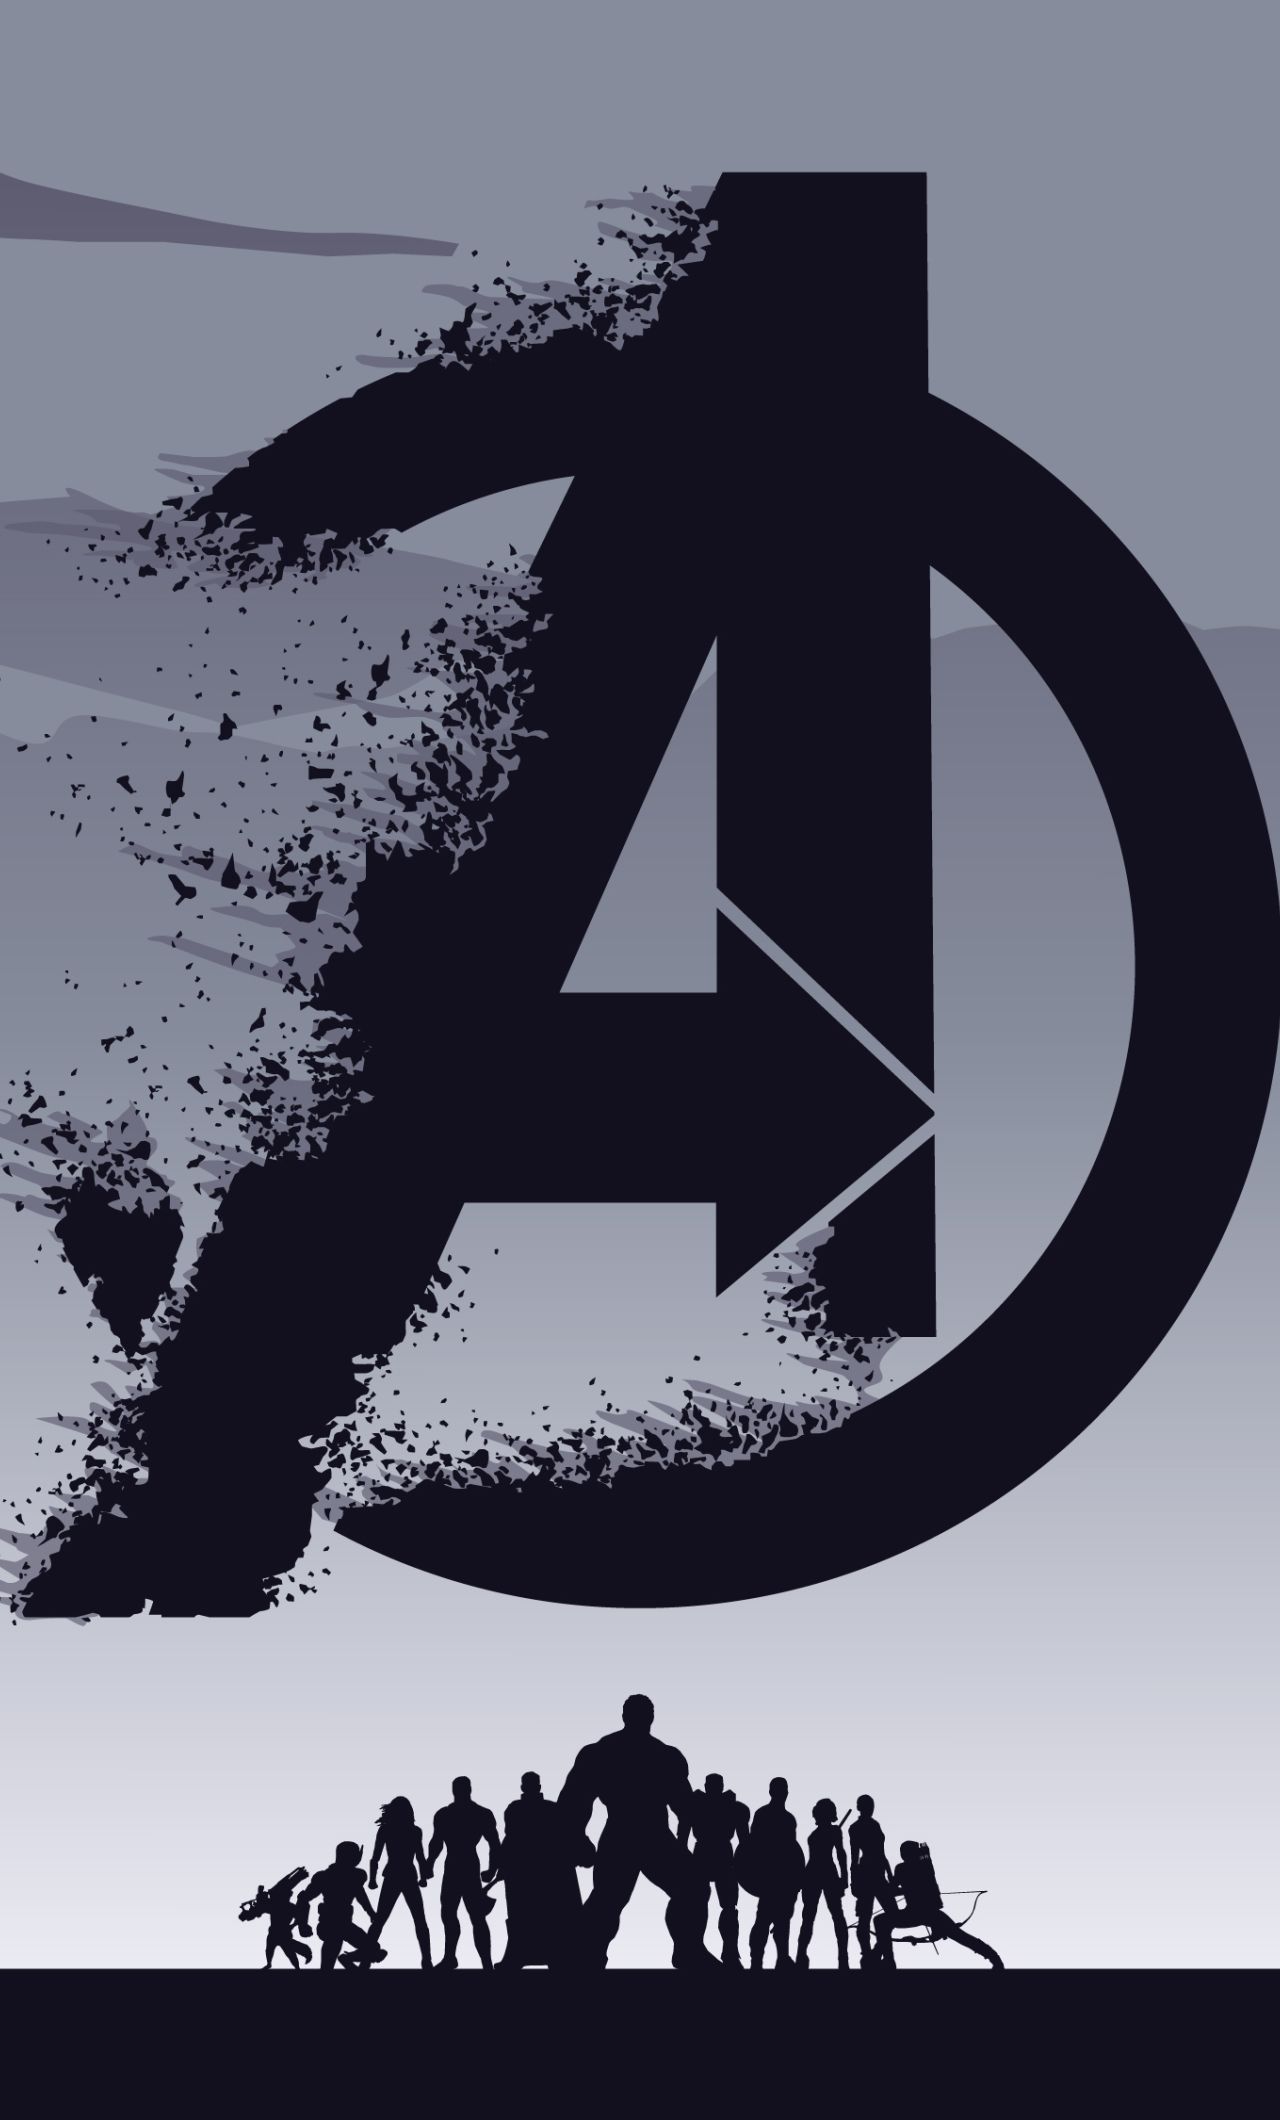 Avengers Endgame 4K Background iPhone 6 plus Wallpaper, HD Artist 4K Wallpaper, Image, Photo and Background